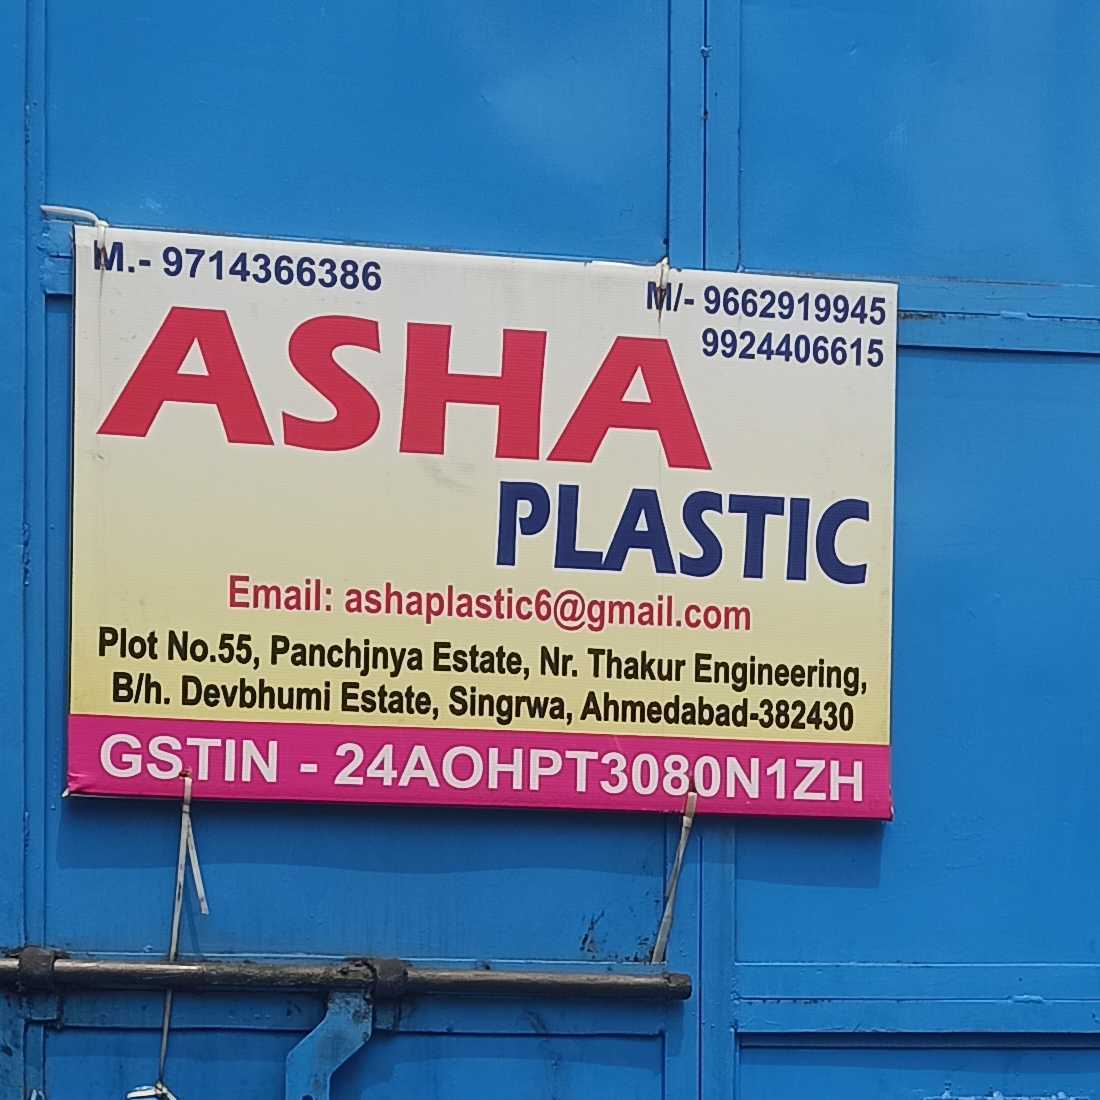 ASHA PLASTIC Asha Plastic gujarat india Plastic4trade